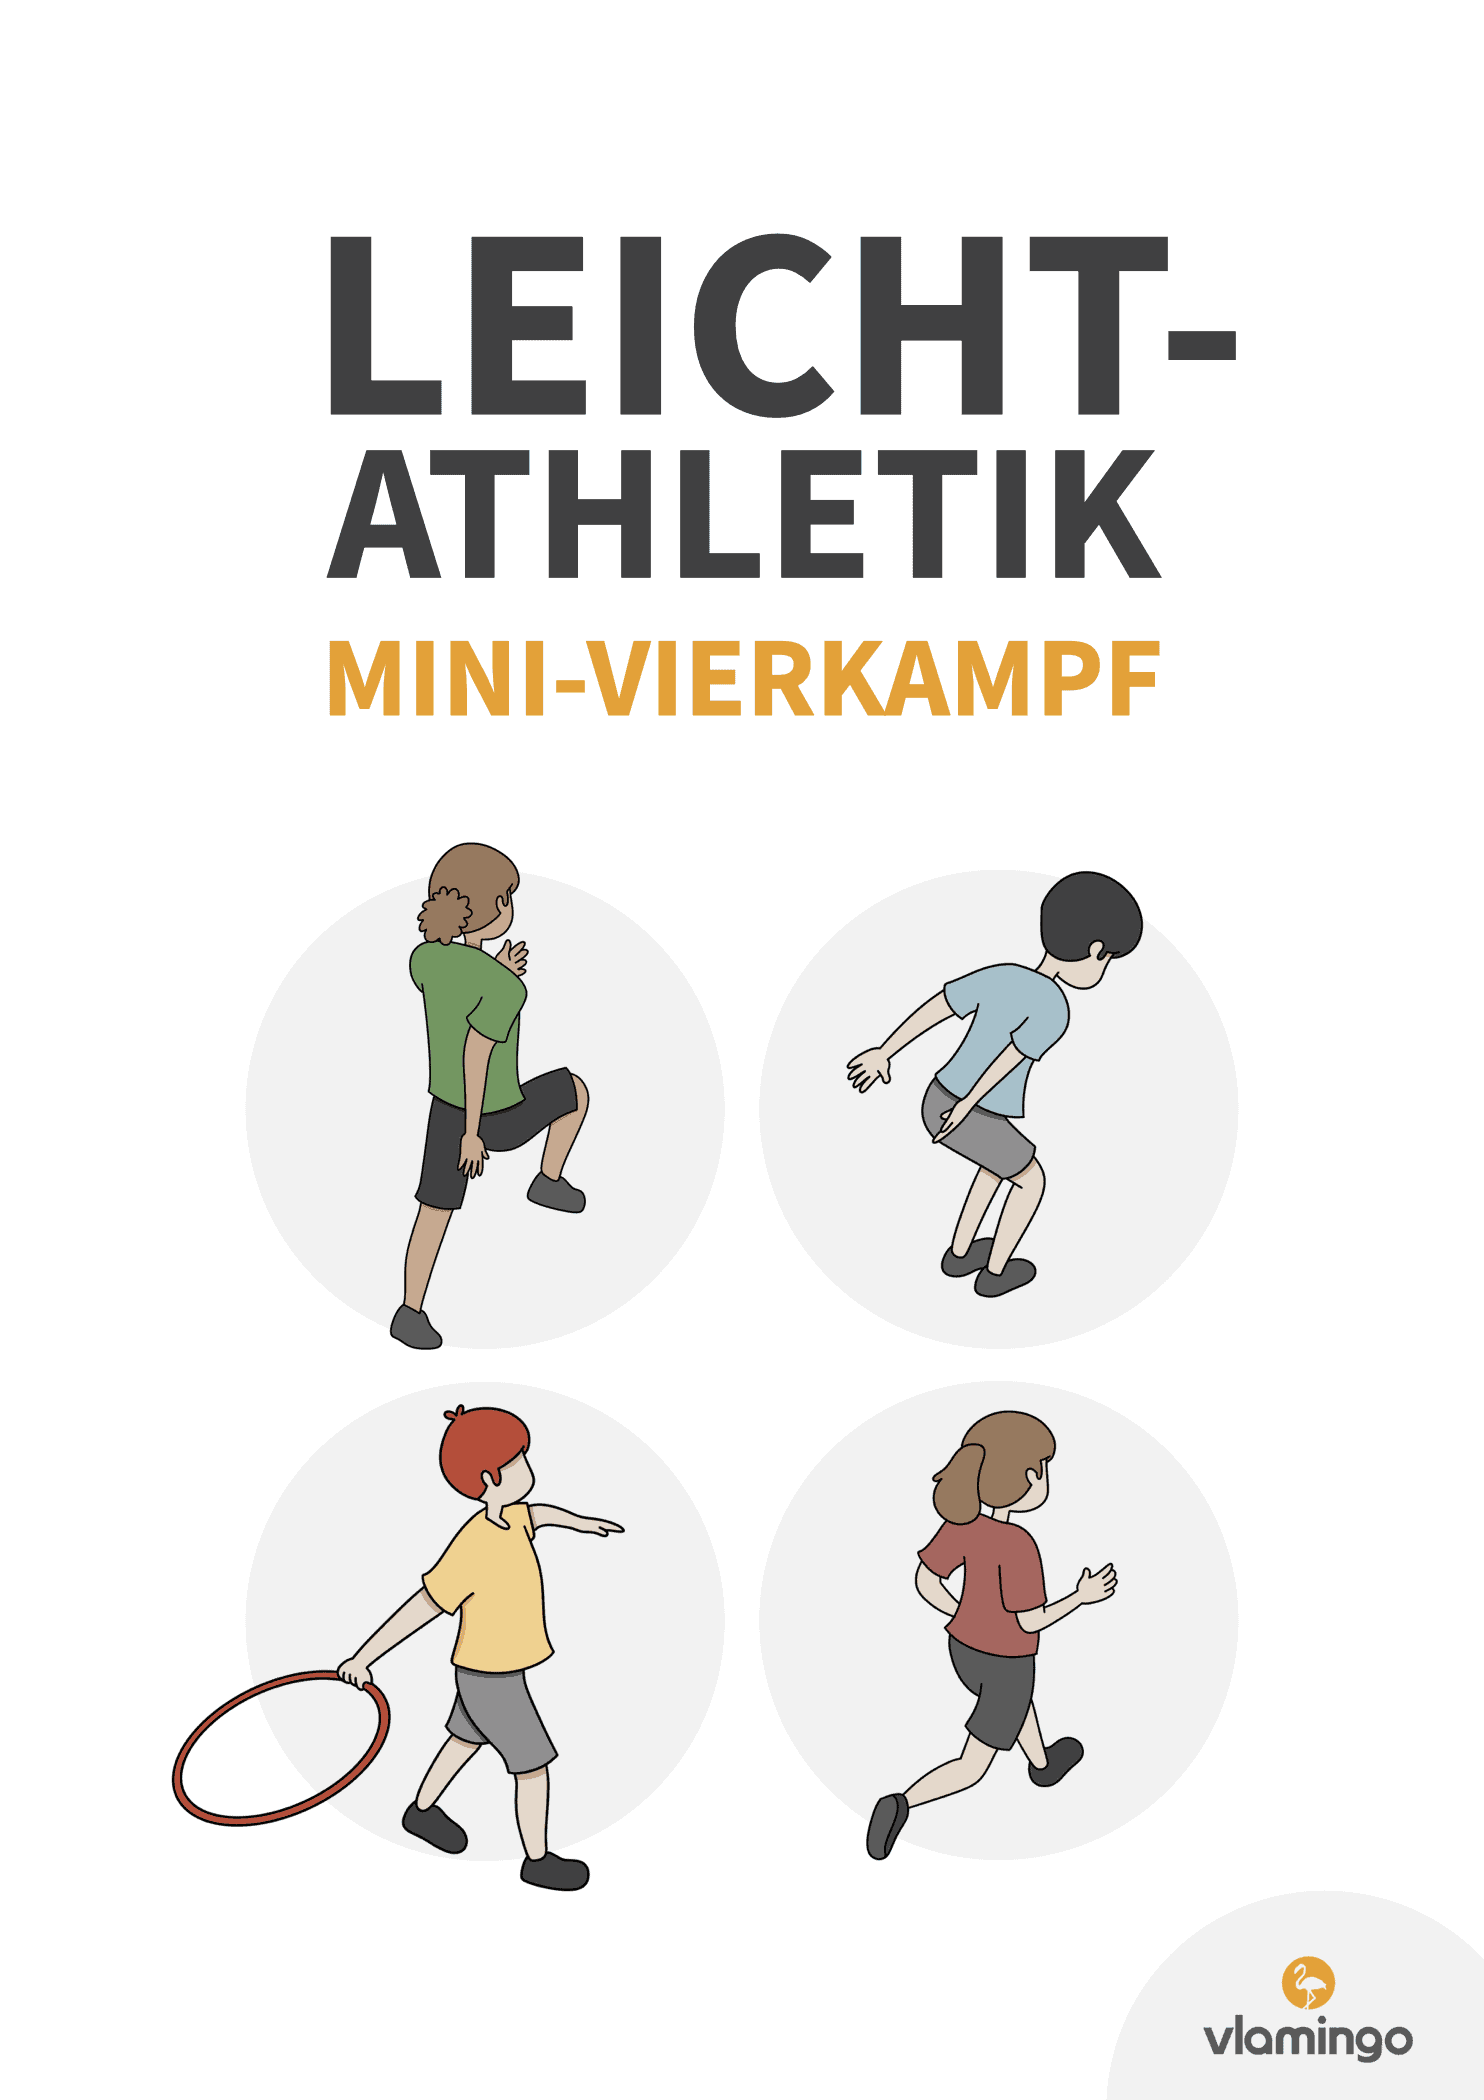 Leichtathletik - Mini-Vierkampf für den Sportunterricht & Sportfeste